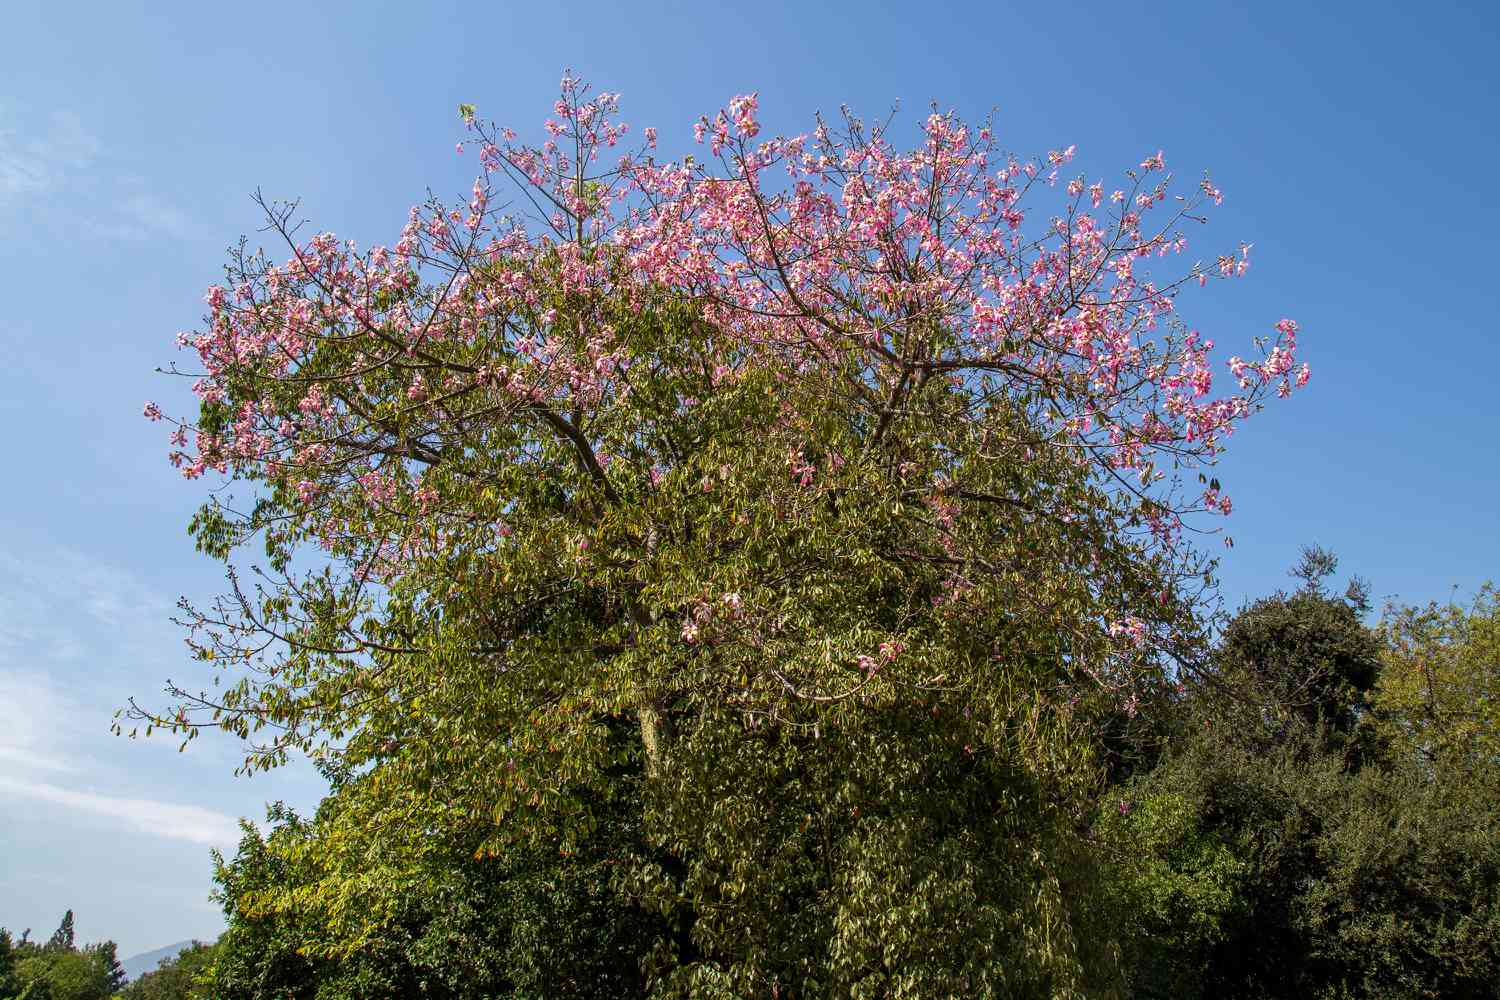 Seidenraupenbaum mit rosa Blüten an der Spitze und dichten Blättern an den unteren Zweigen